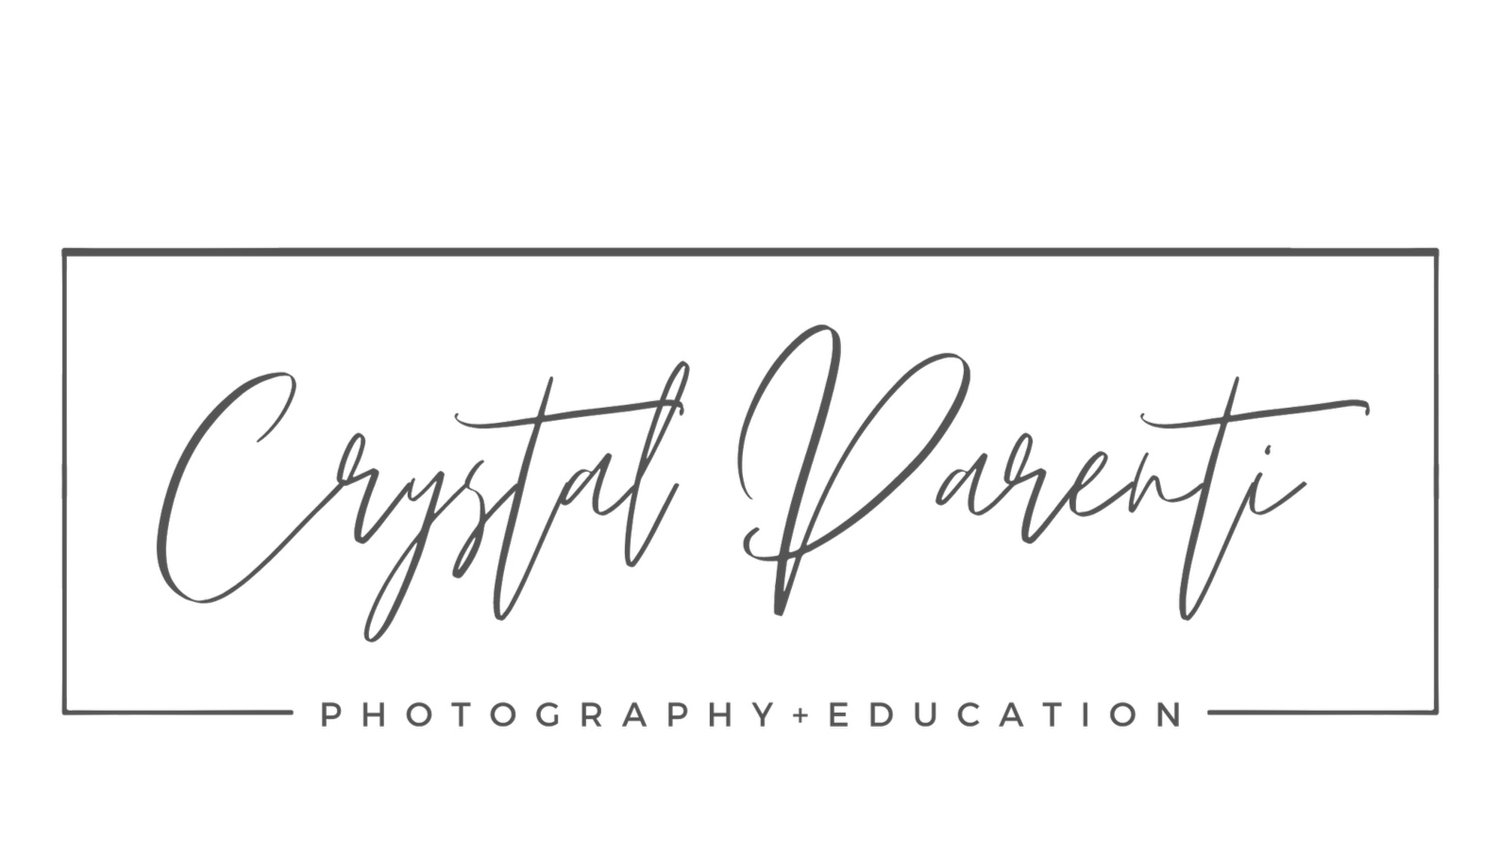 Crystal Parenti Photography